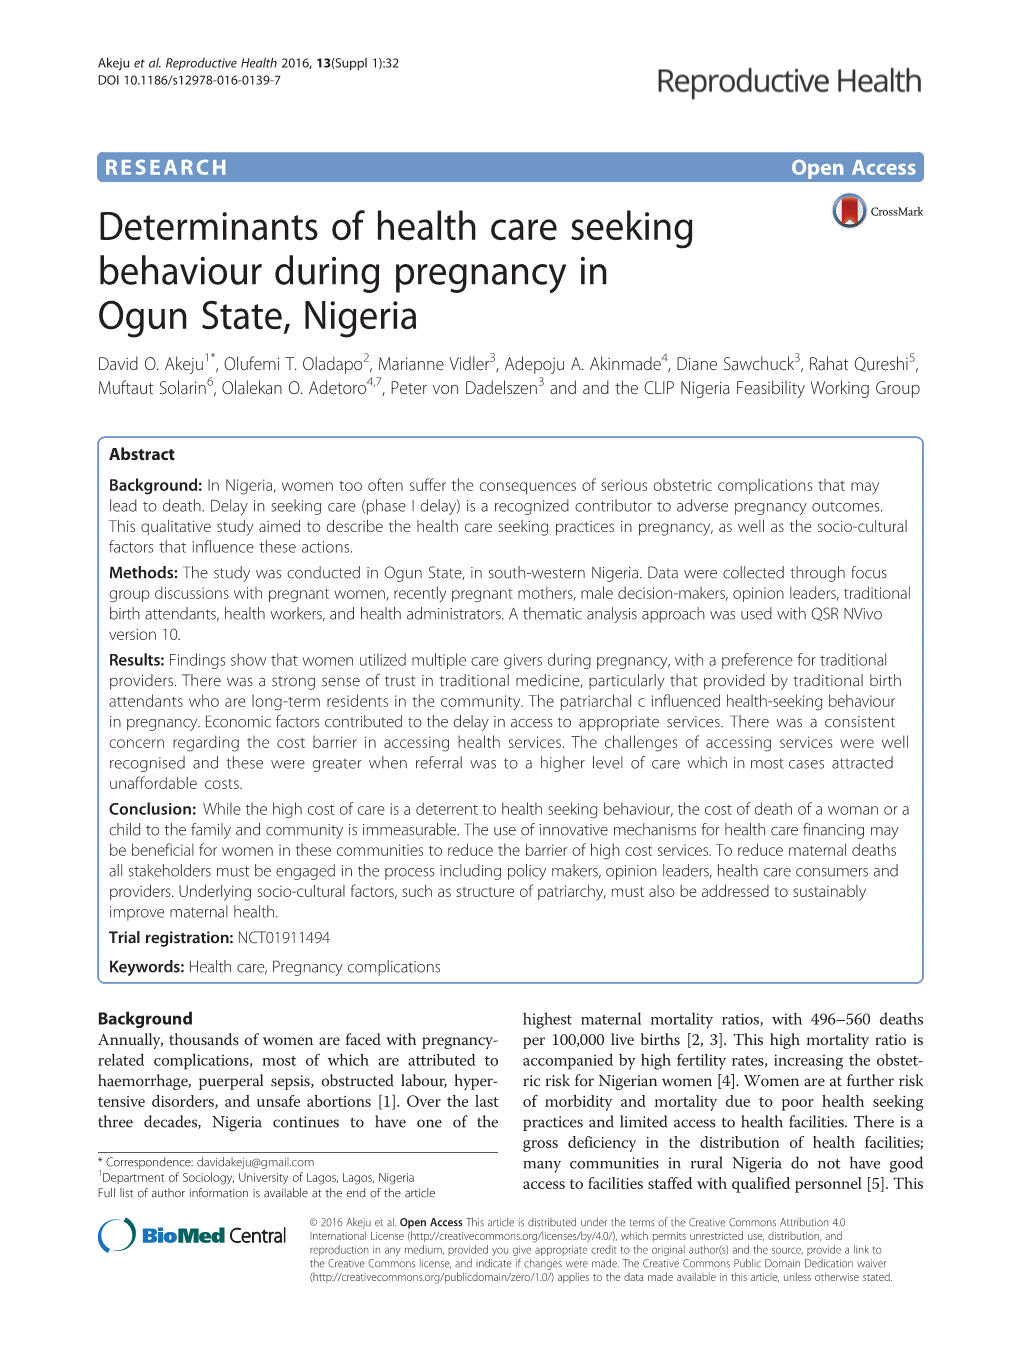 Determinants of Health Care Seeking Behaviour During Pregnancy in Ogun State, Nigeria David O